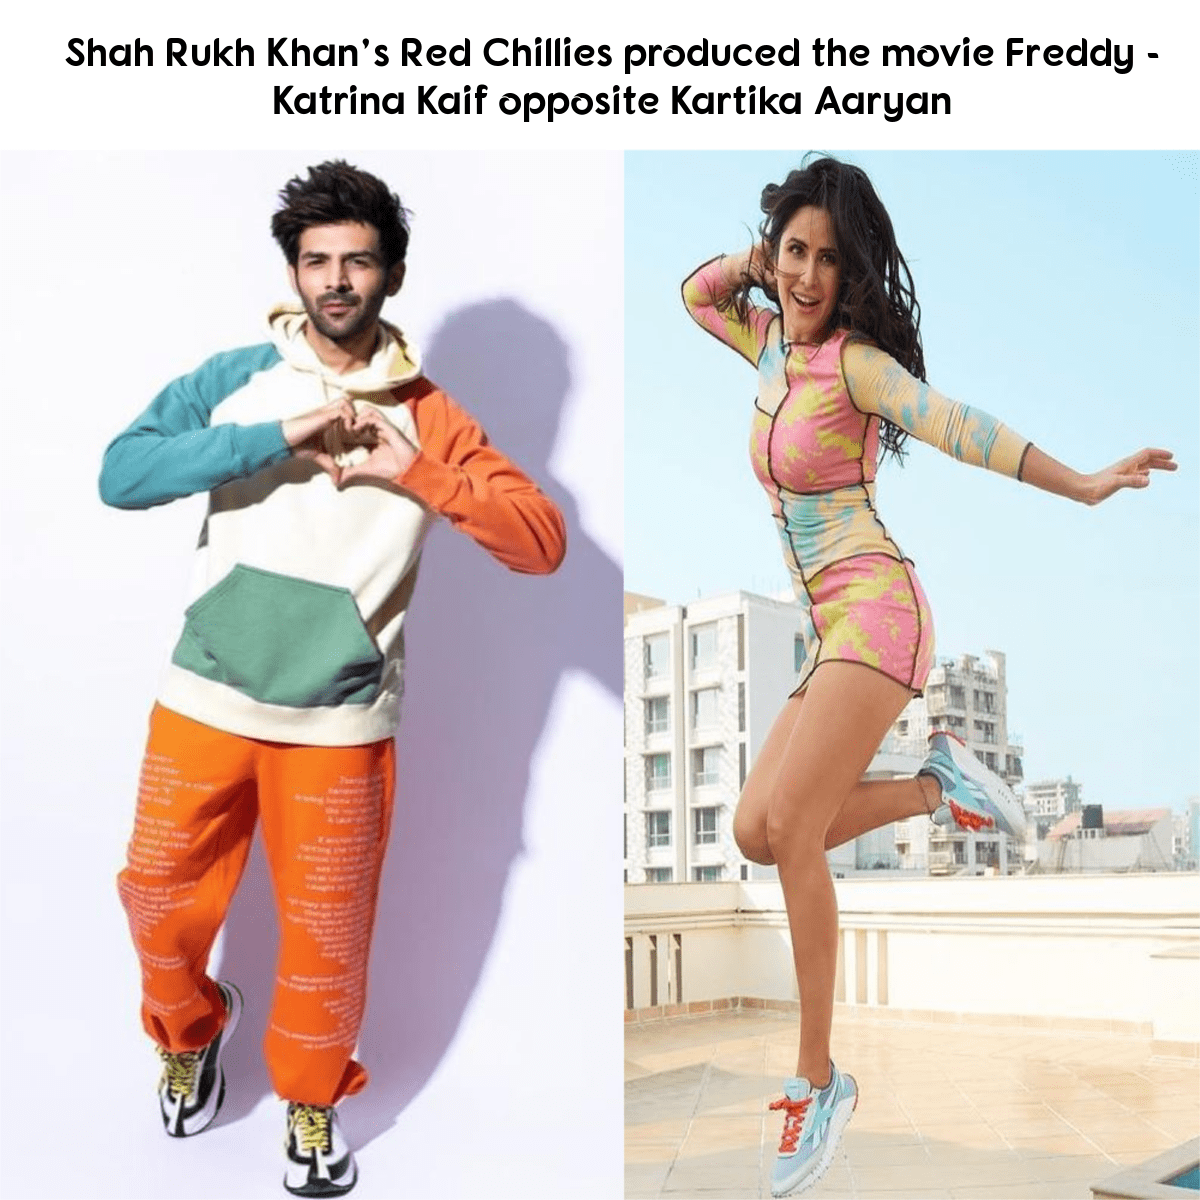 Shah Rukh Khan’s Red Chillies produced the movie Freddy - Katrina Kaif opposite Kartika Aaryan Shah Rukh Khan’s Red Chillies produced the movie Freddy - Katrina Kaif opposite Kartika Aaryan,